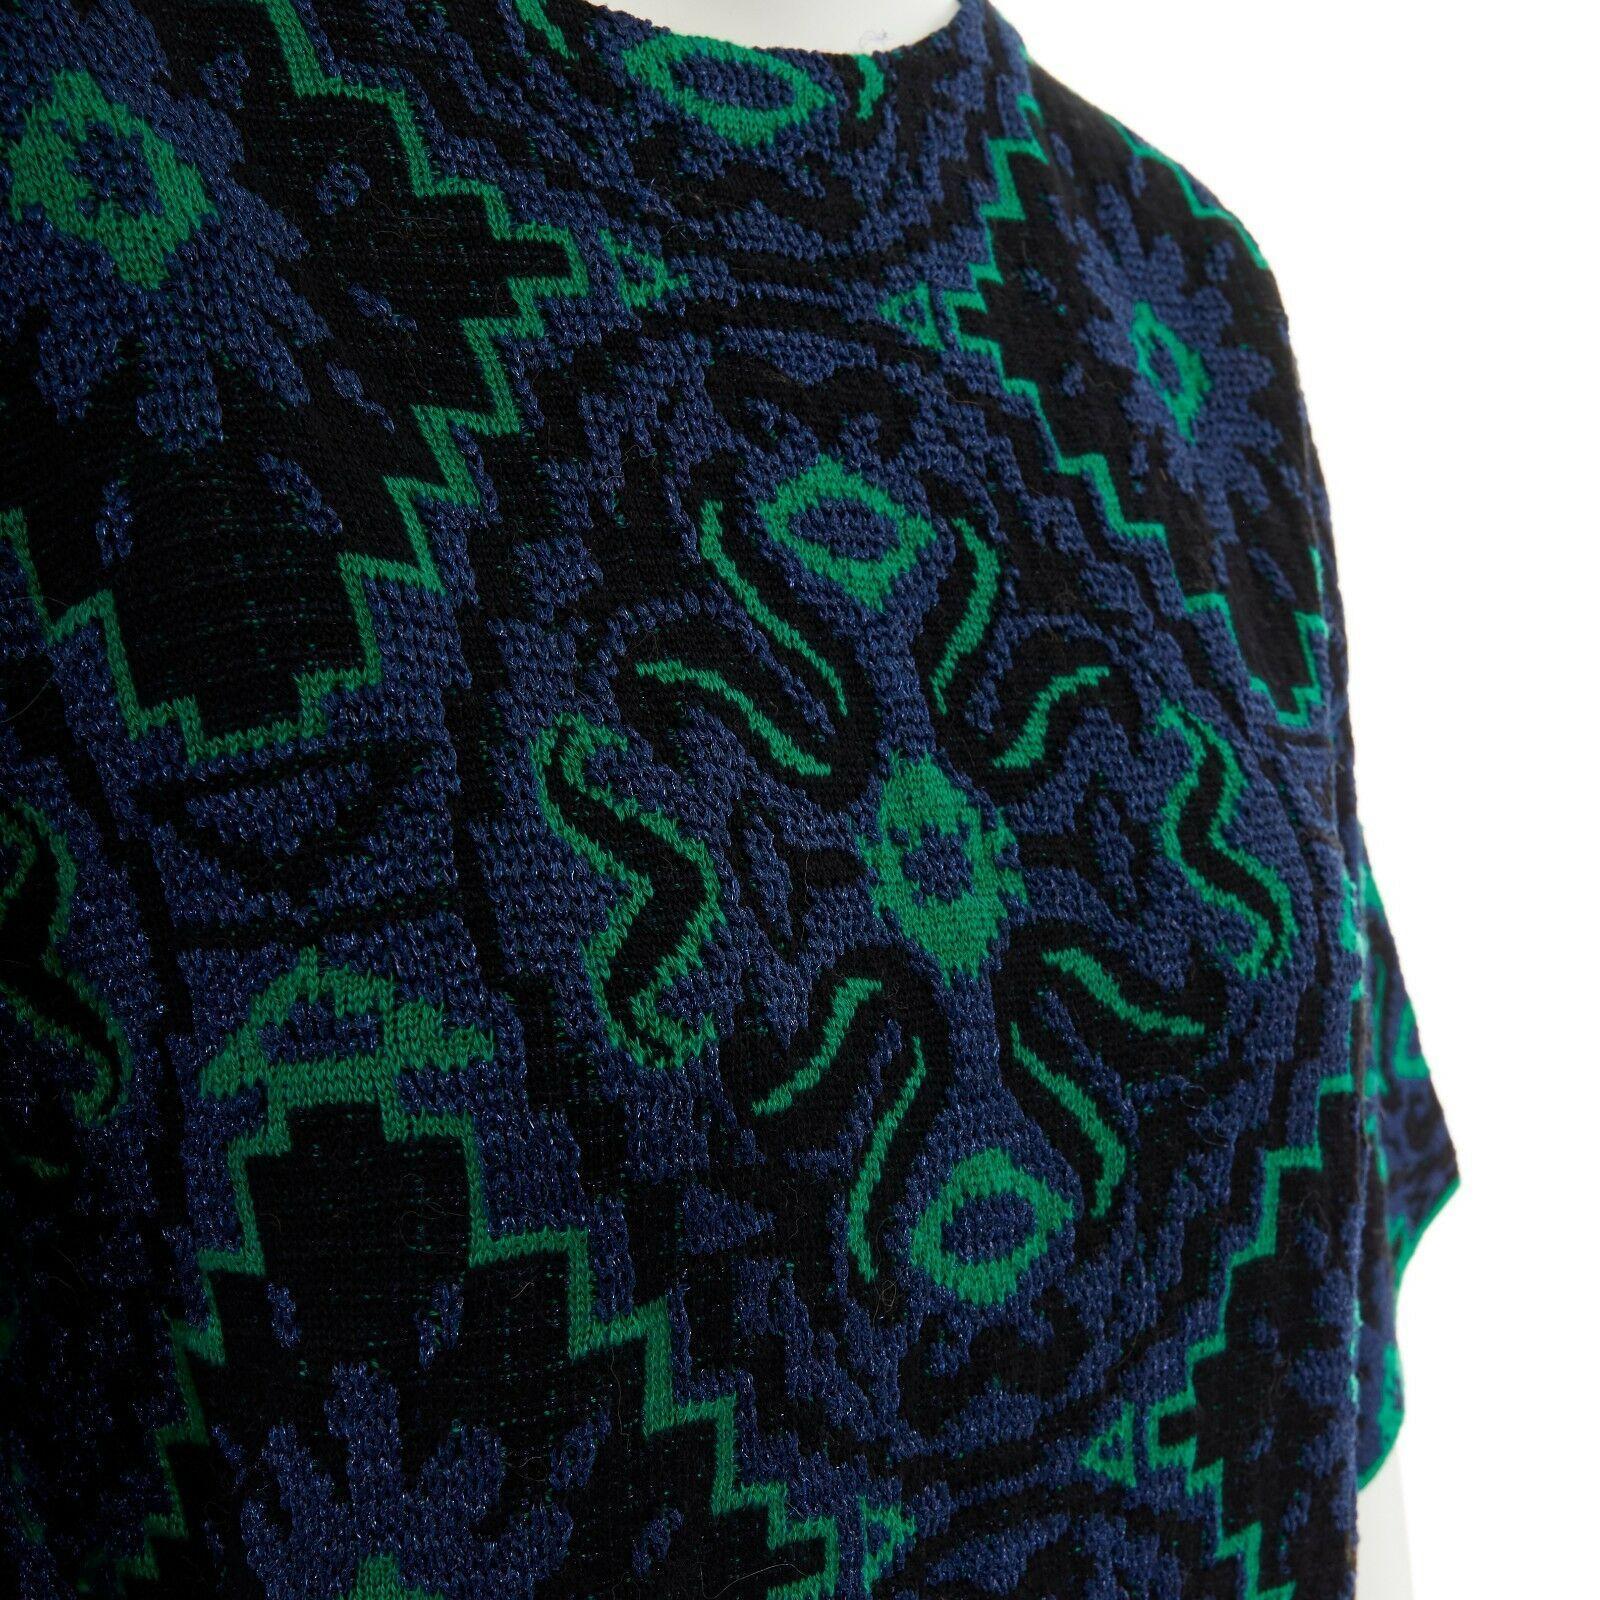 Black DRIES VAN NOTEN green blue ethnic jacquard knitted boxy short sleeve top M